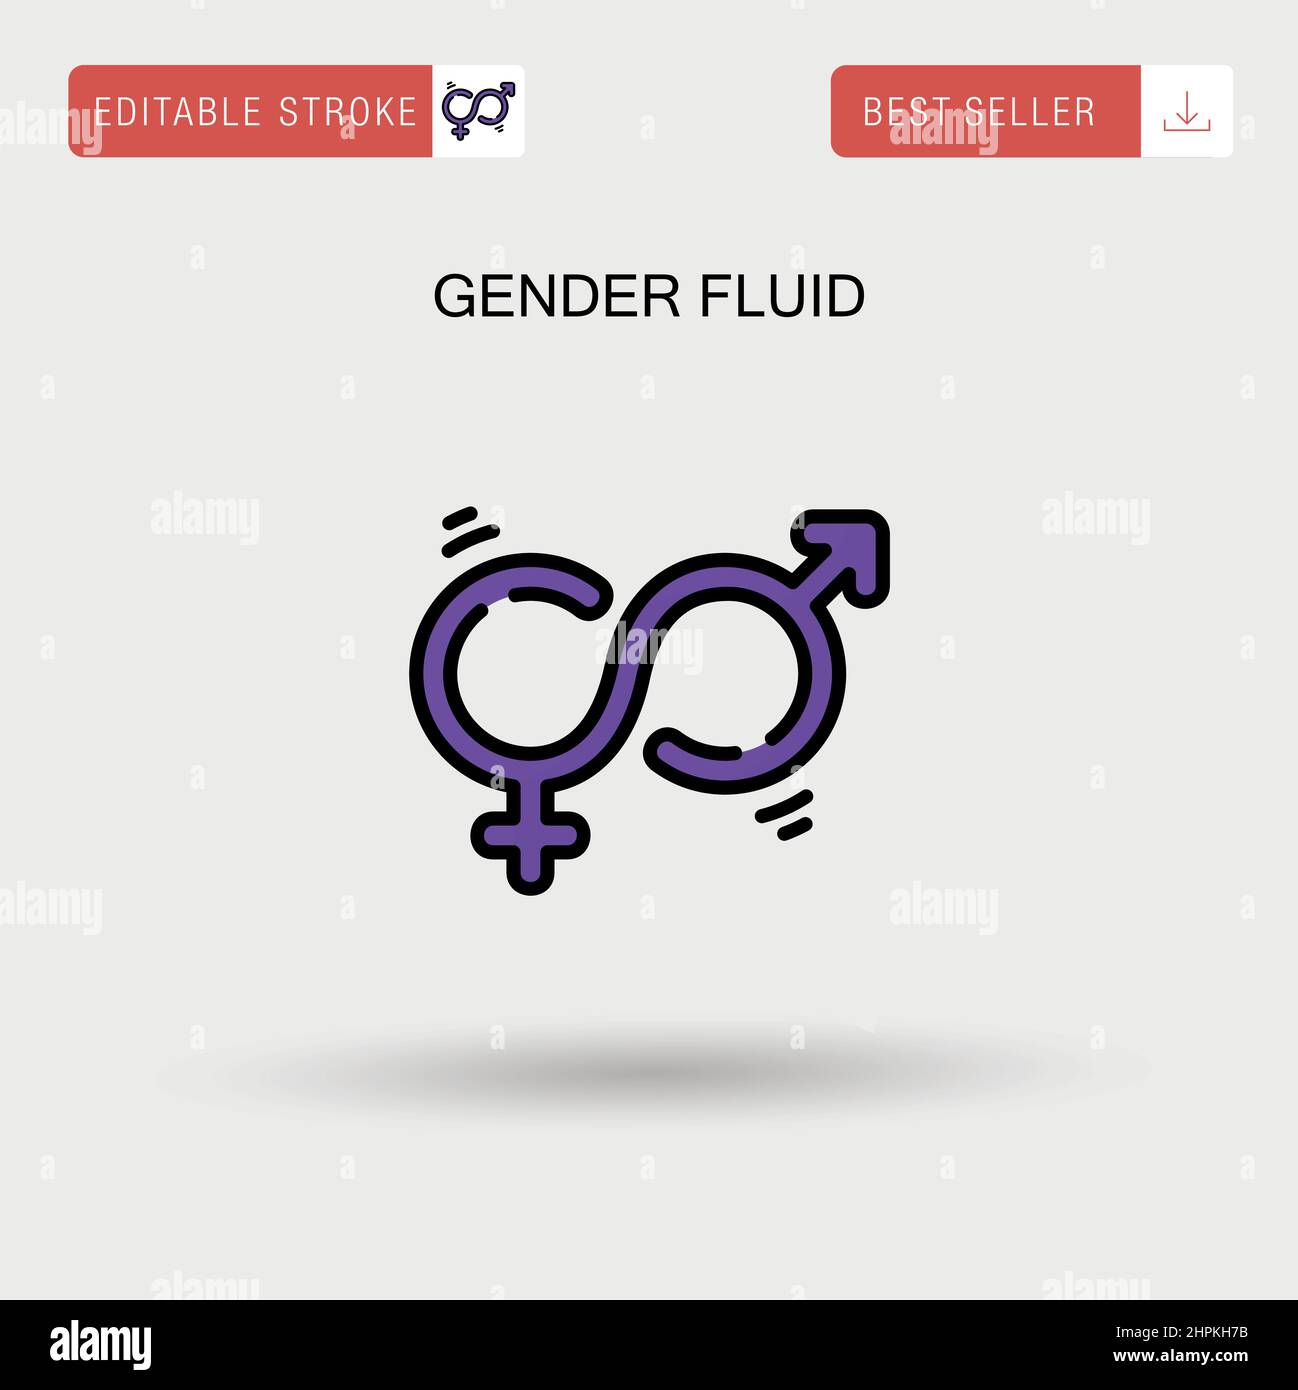 Gender fluid Stock Vector Images - Alamy